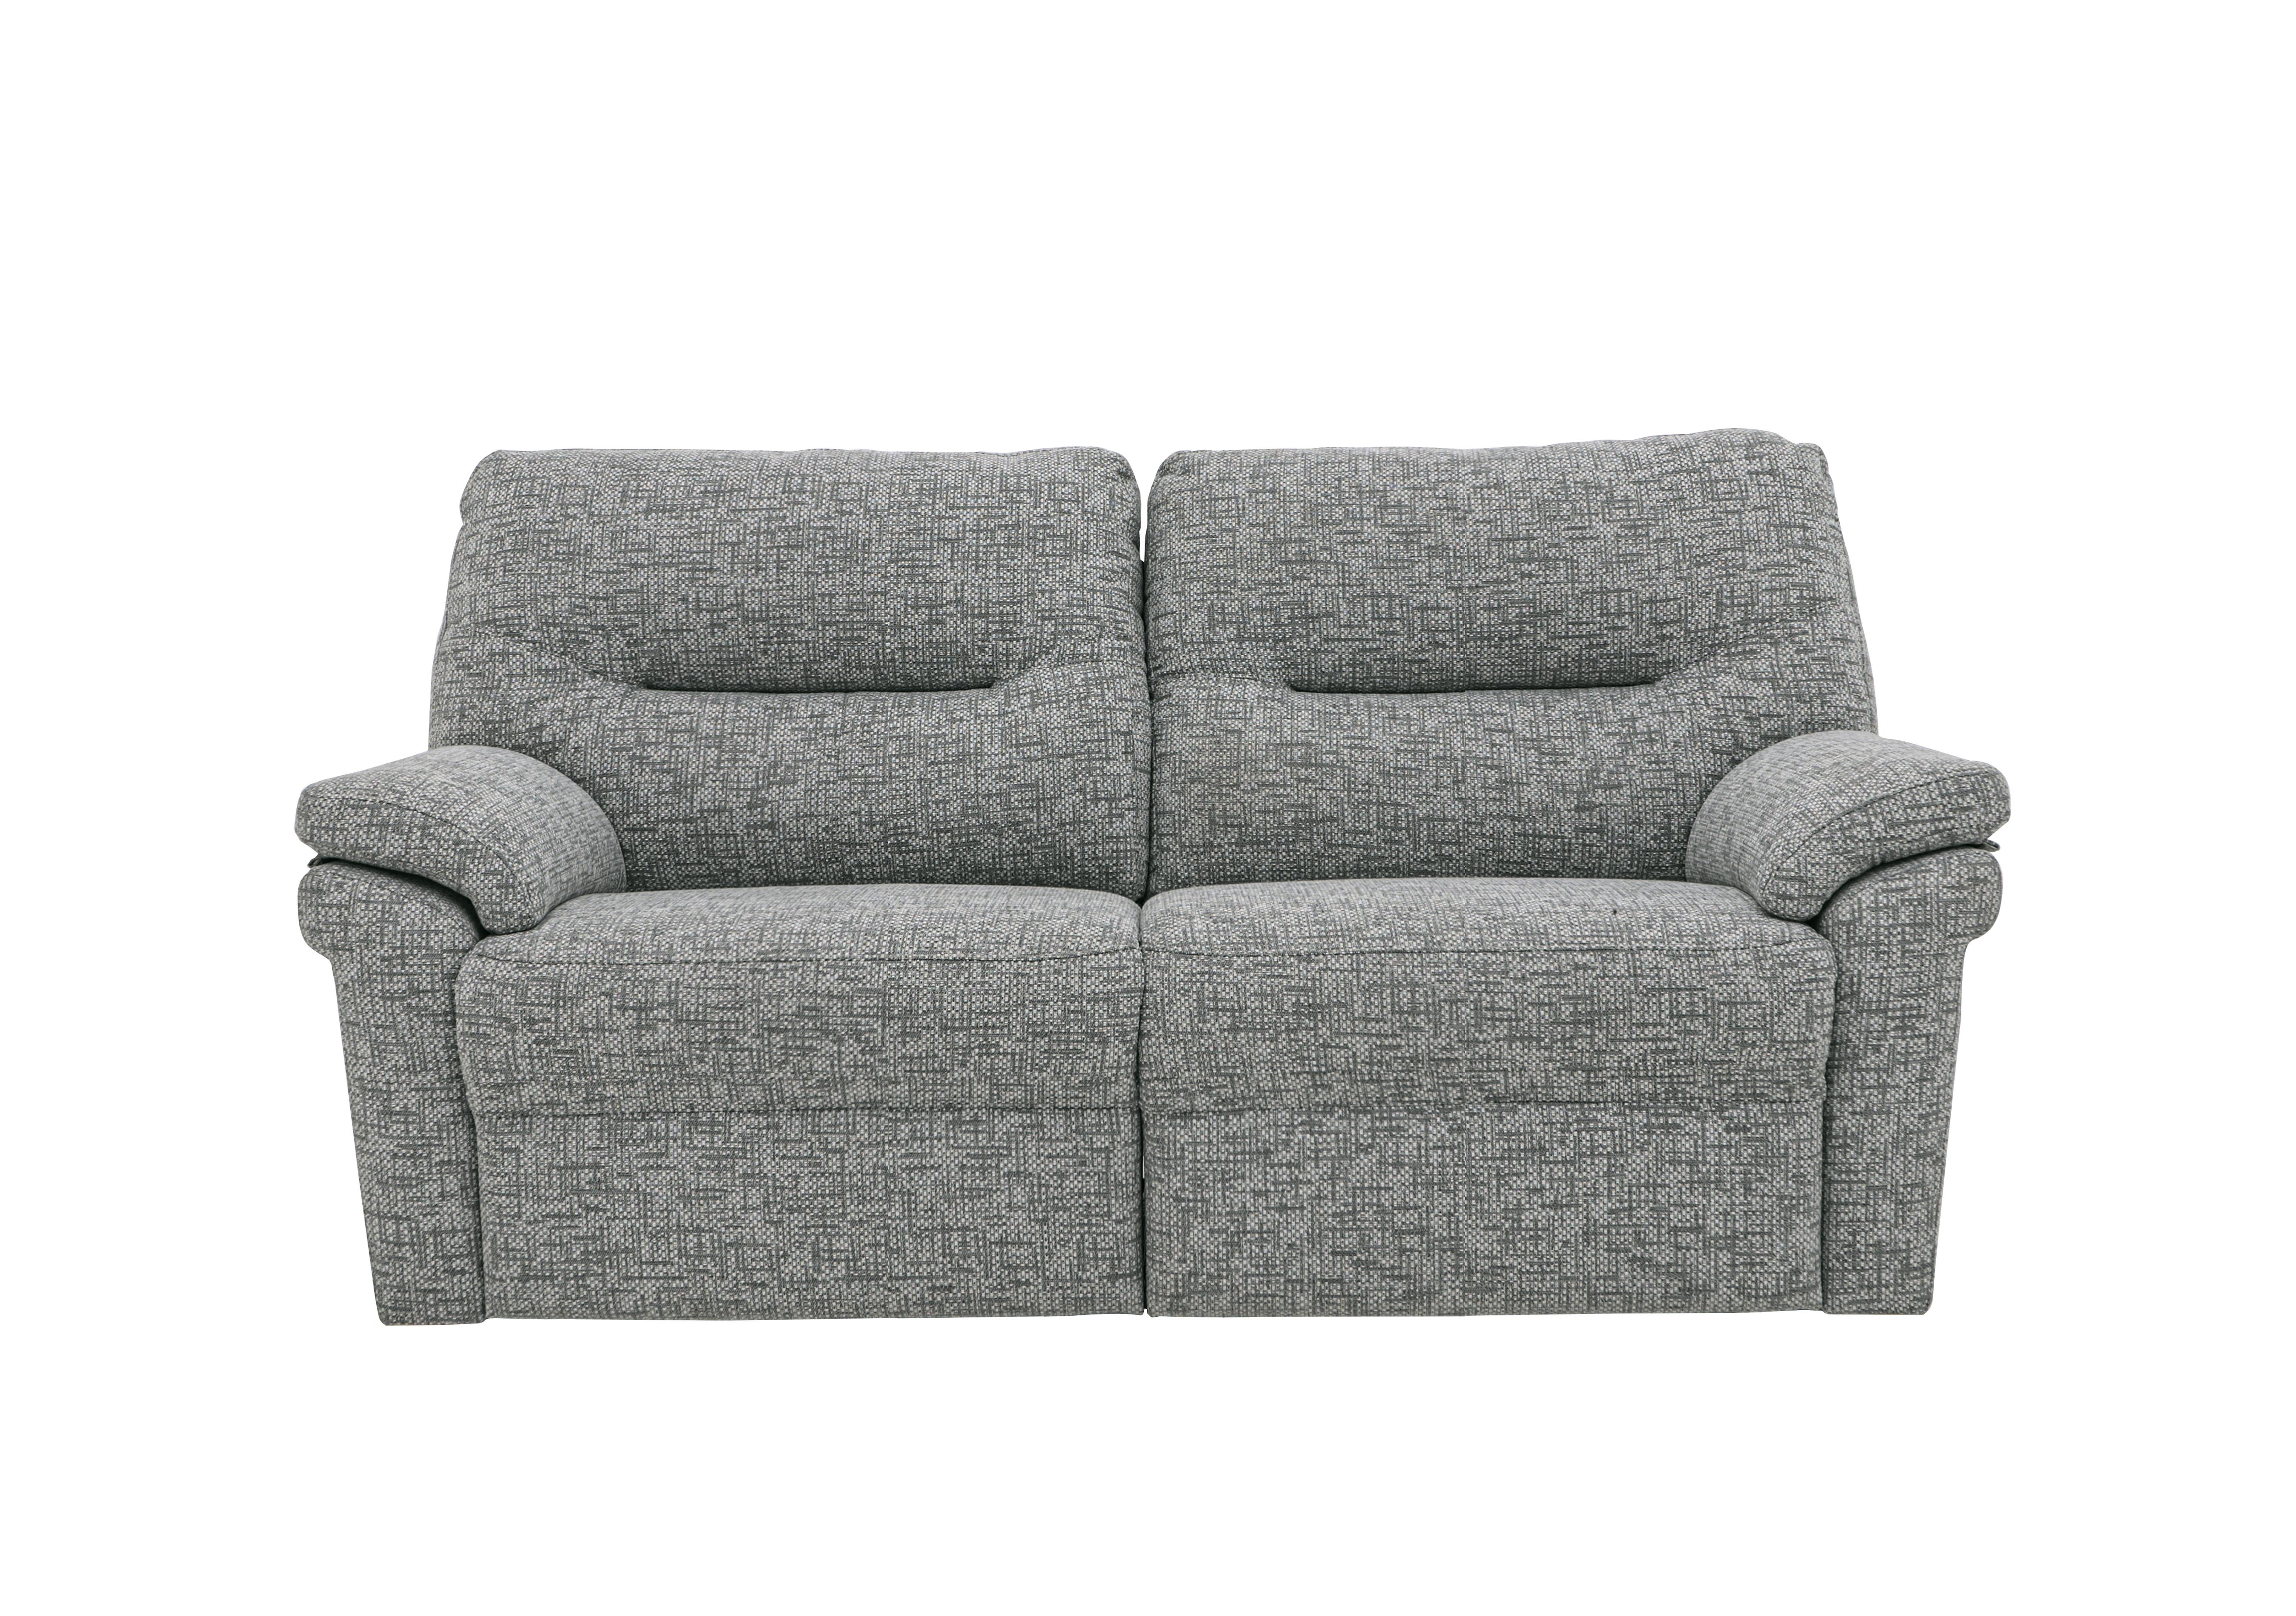 Seattle 2.5 Seater Fabric Sofa in B030 Remco Light Grey on Furniture Village